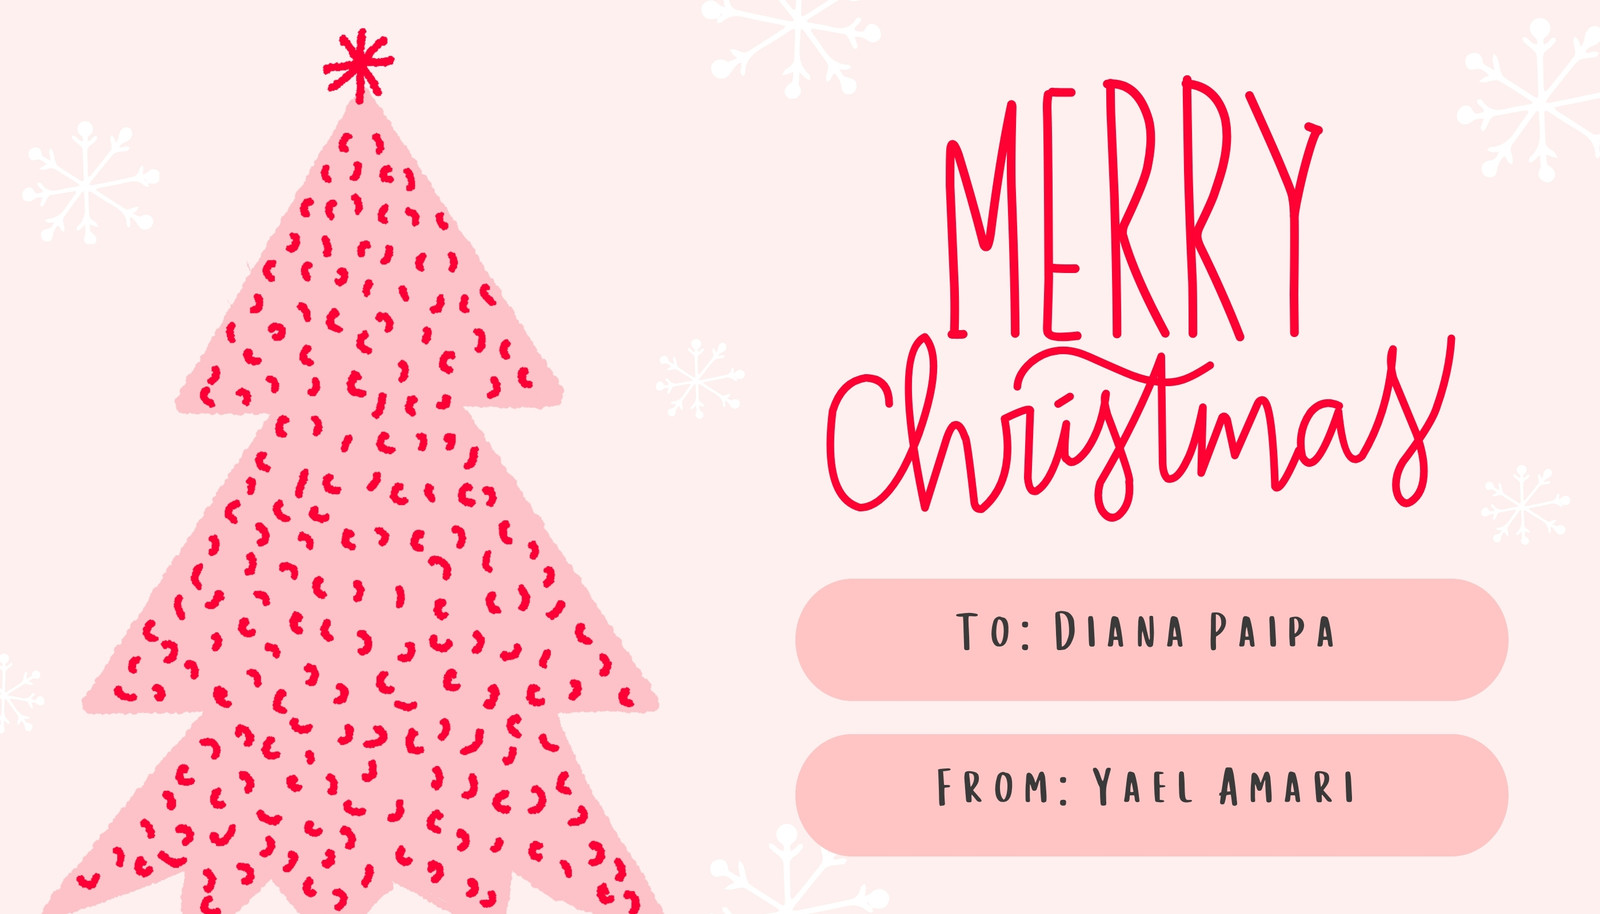 Christmas Gift Tags - Thank You Christmas Tags - Thank You Holiday Gif –  CraftyKizzy